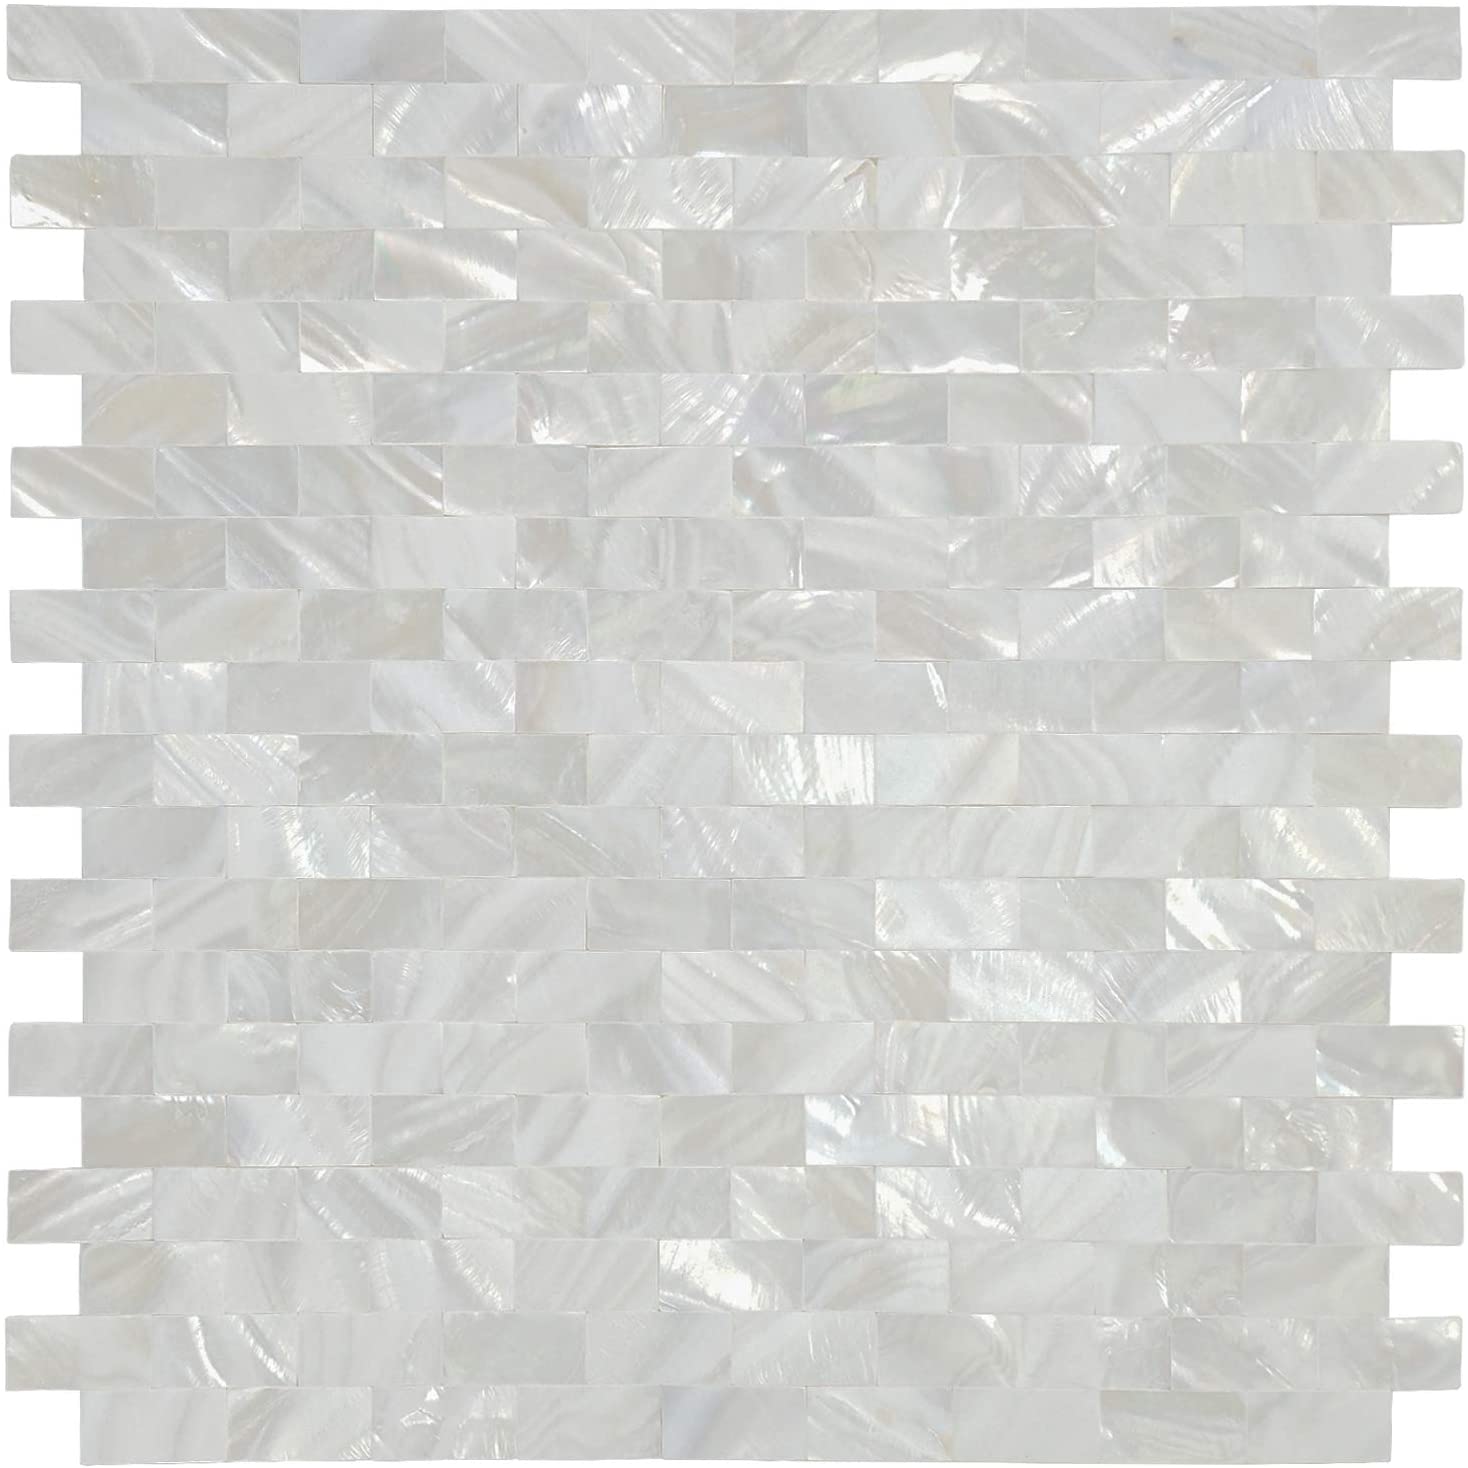 A18211 - Art3d 10-sheet Mother of Pearl Shell Mosaic Tile for Kitchen Backsplash/Shower Wall Tile, 12